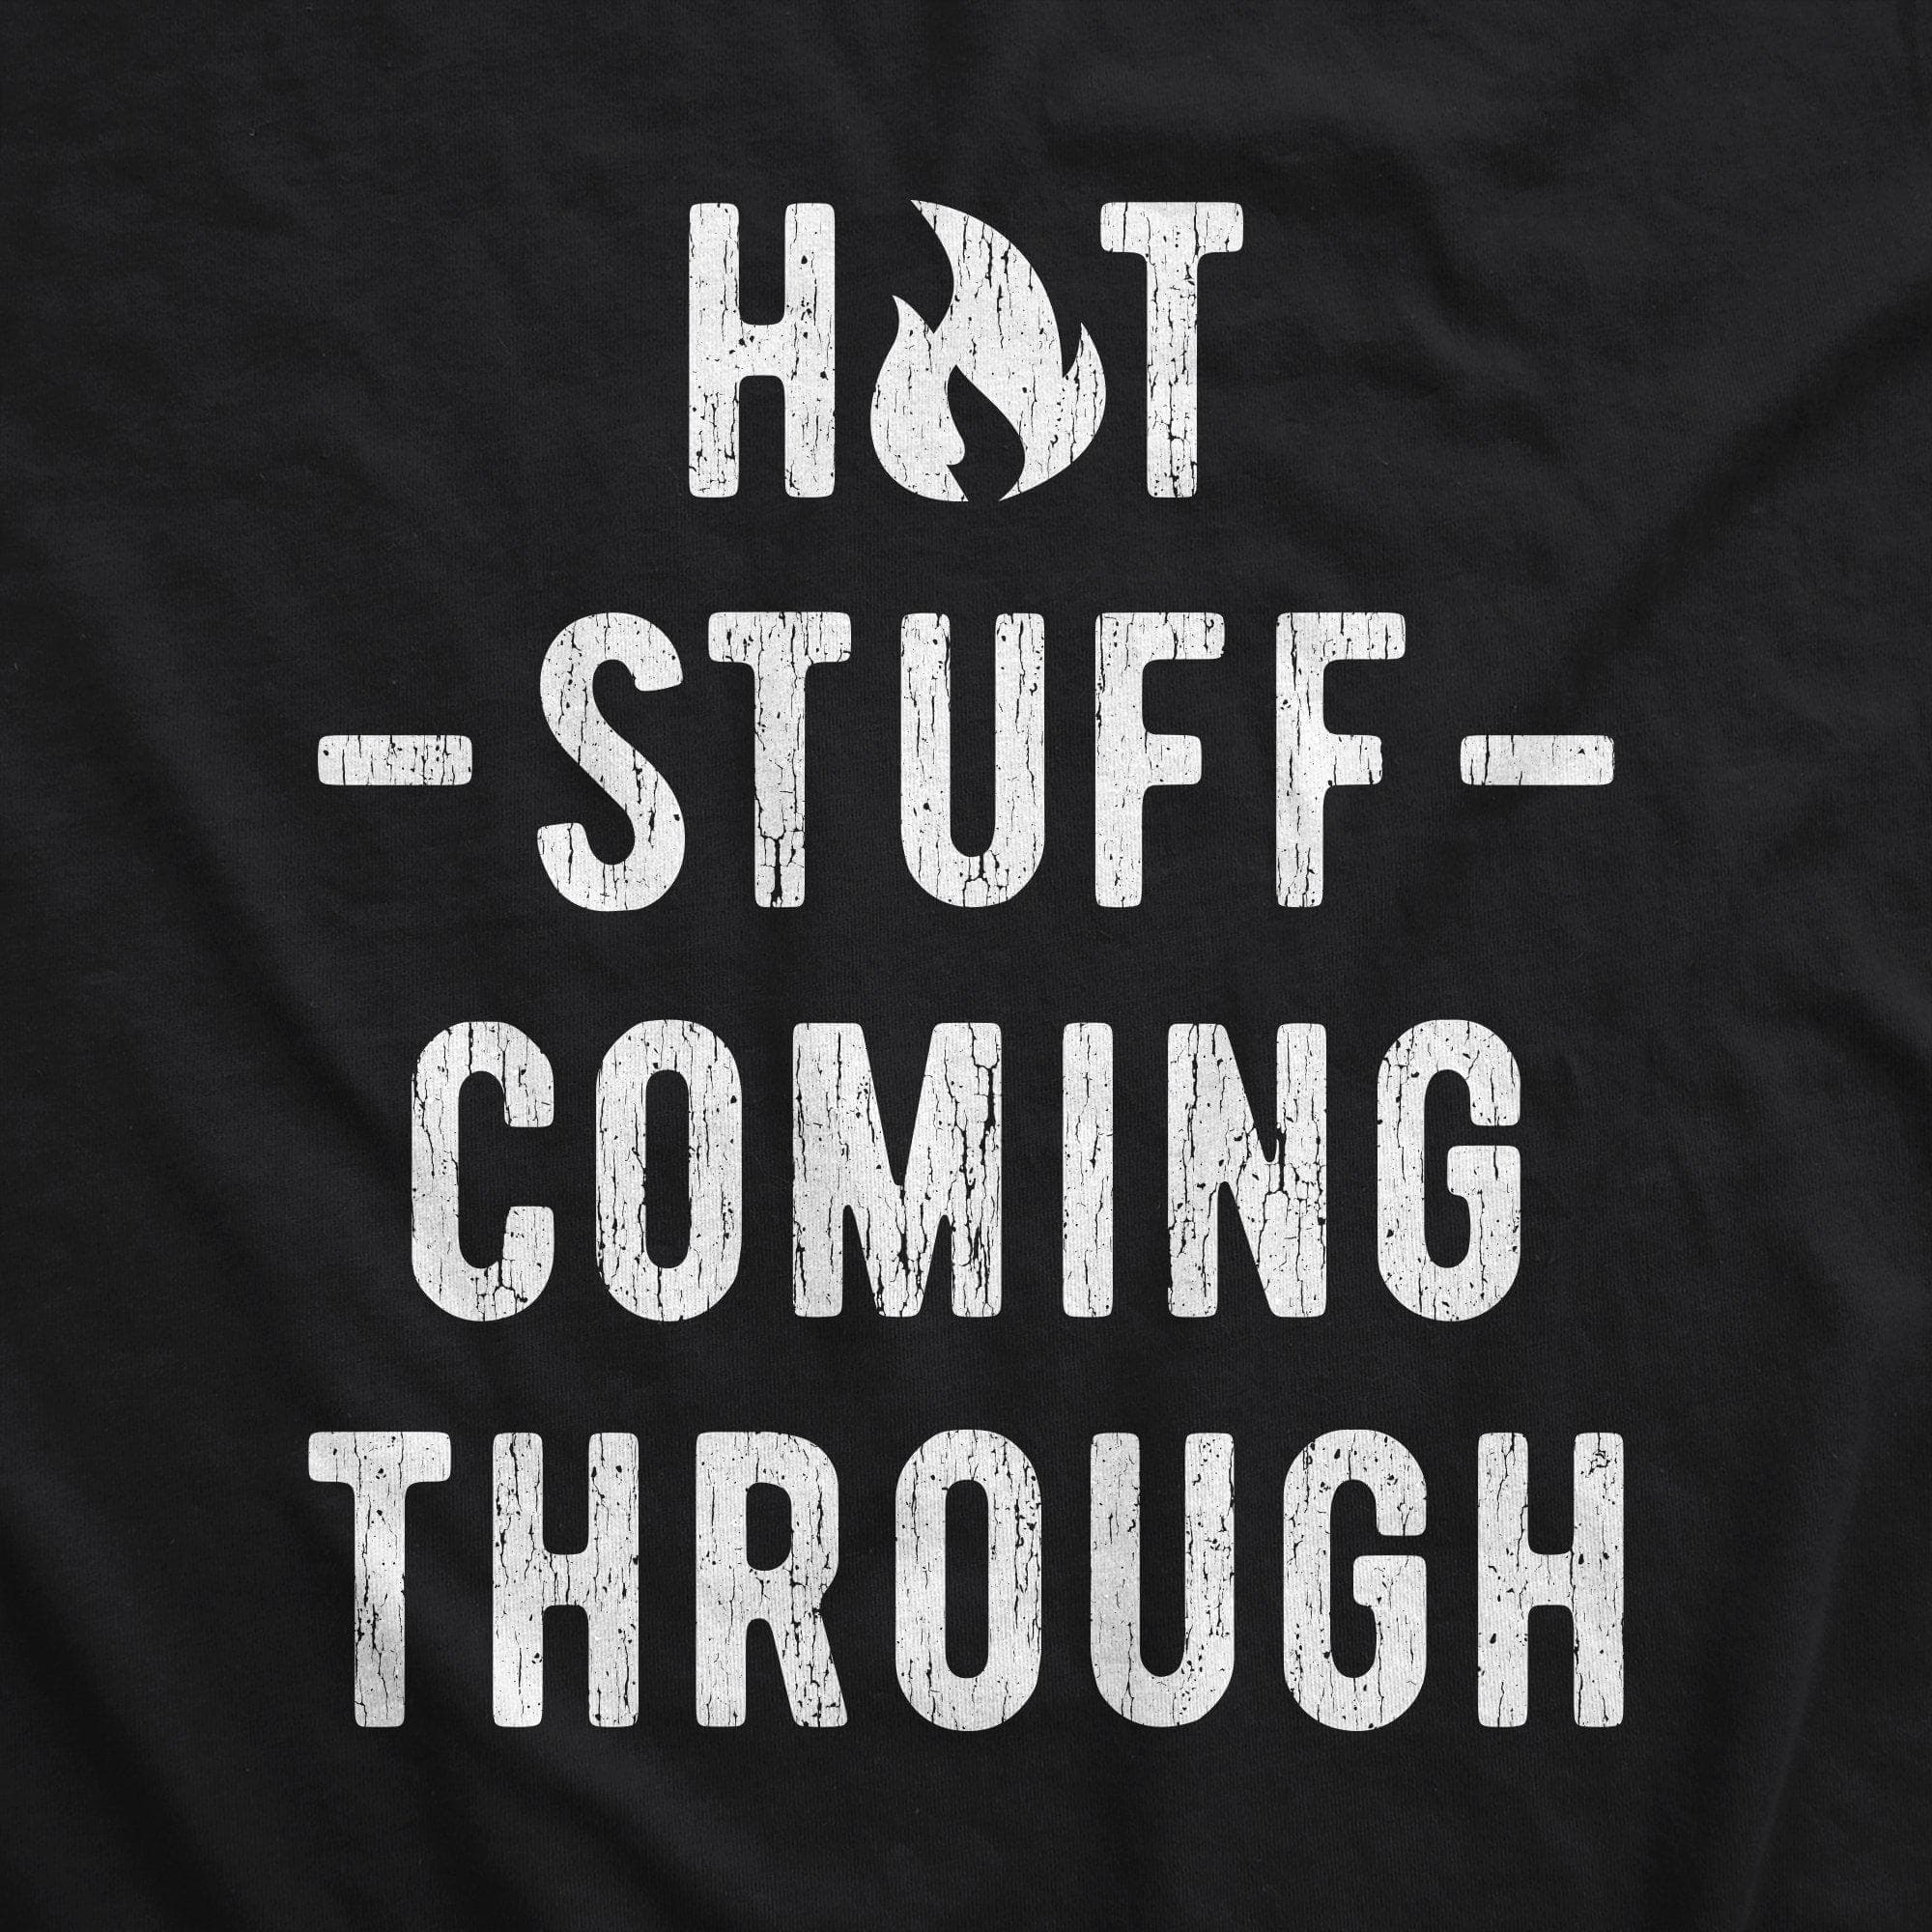 Hot Stuff Coming Through Cookout Apron - Crazy Dog T-Shirts